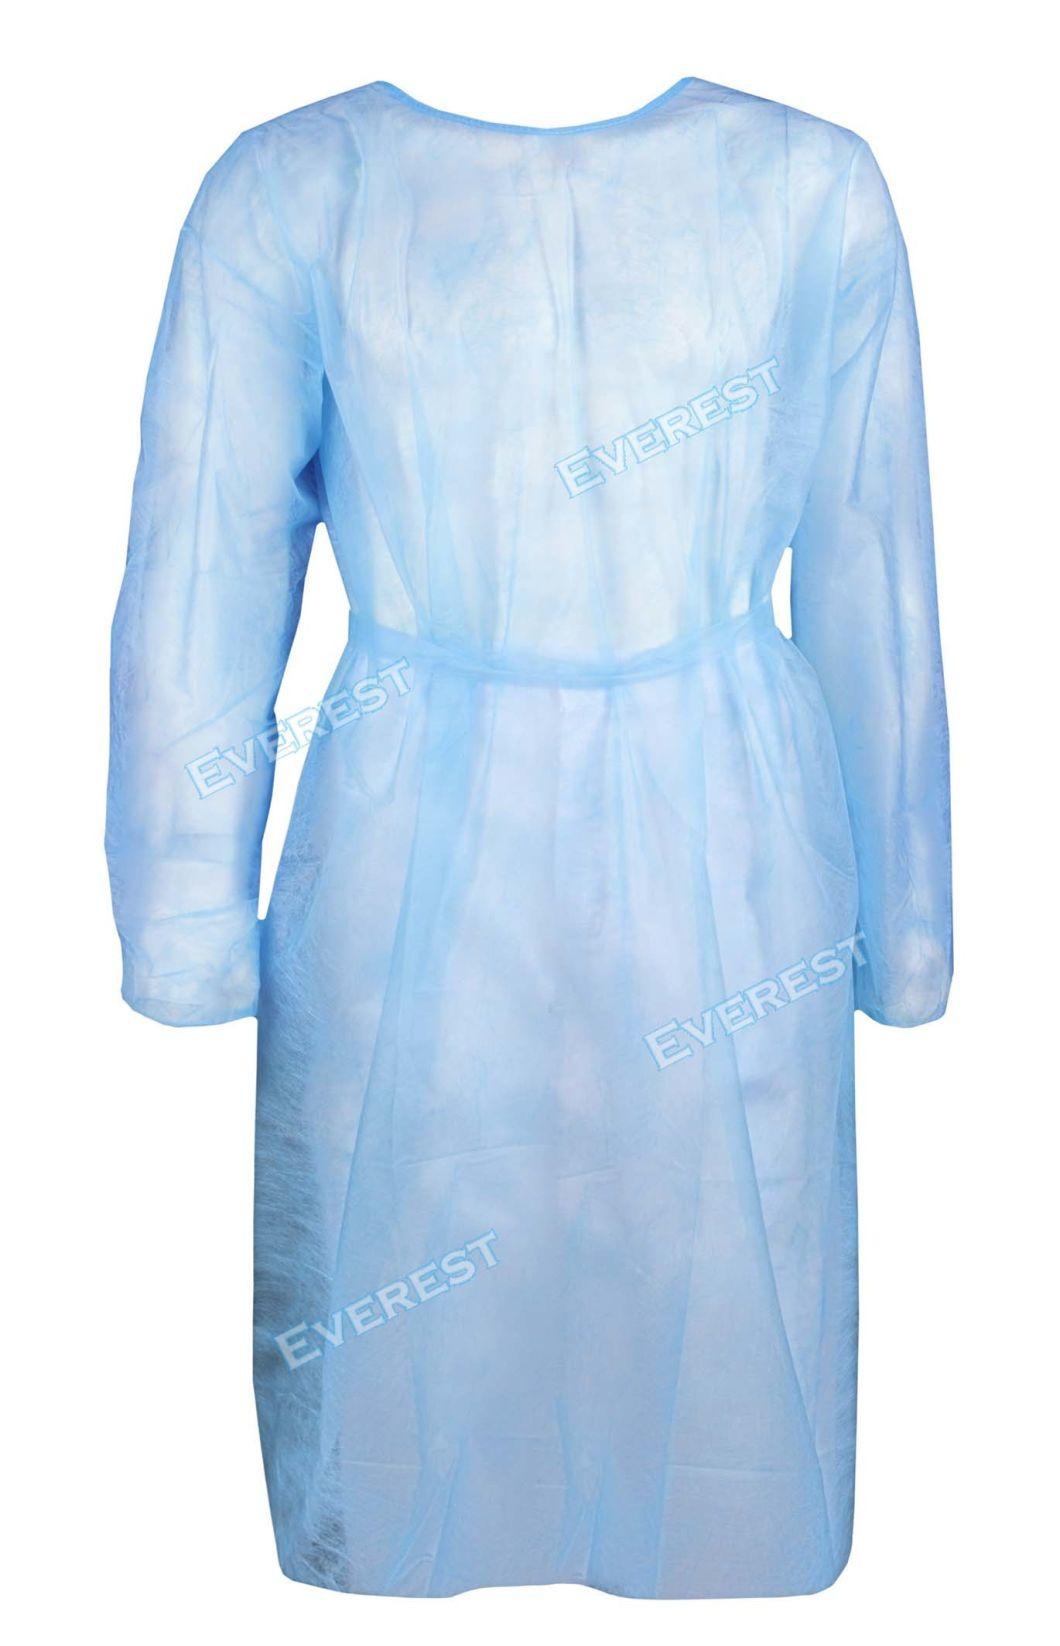 SBPP Nurse/Blue Isolation Gown